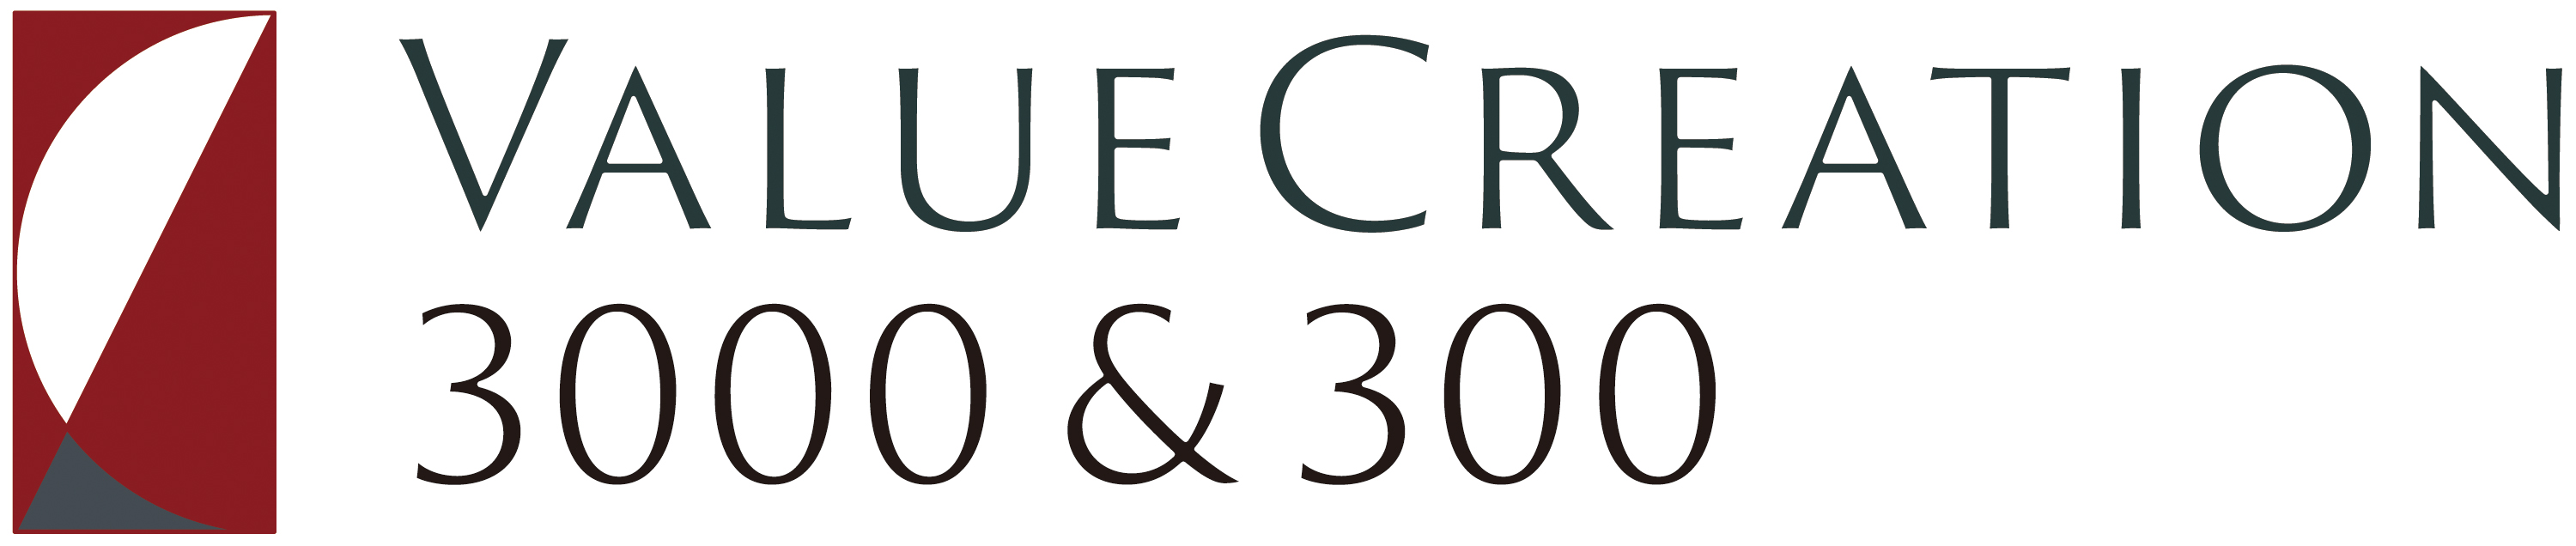 Value Creation 3000 & 300 logo